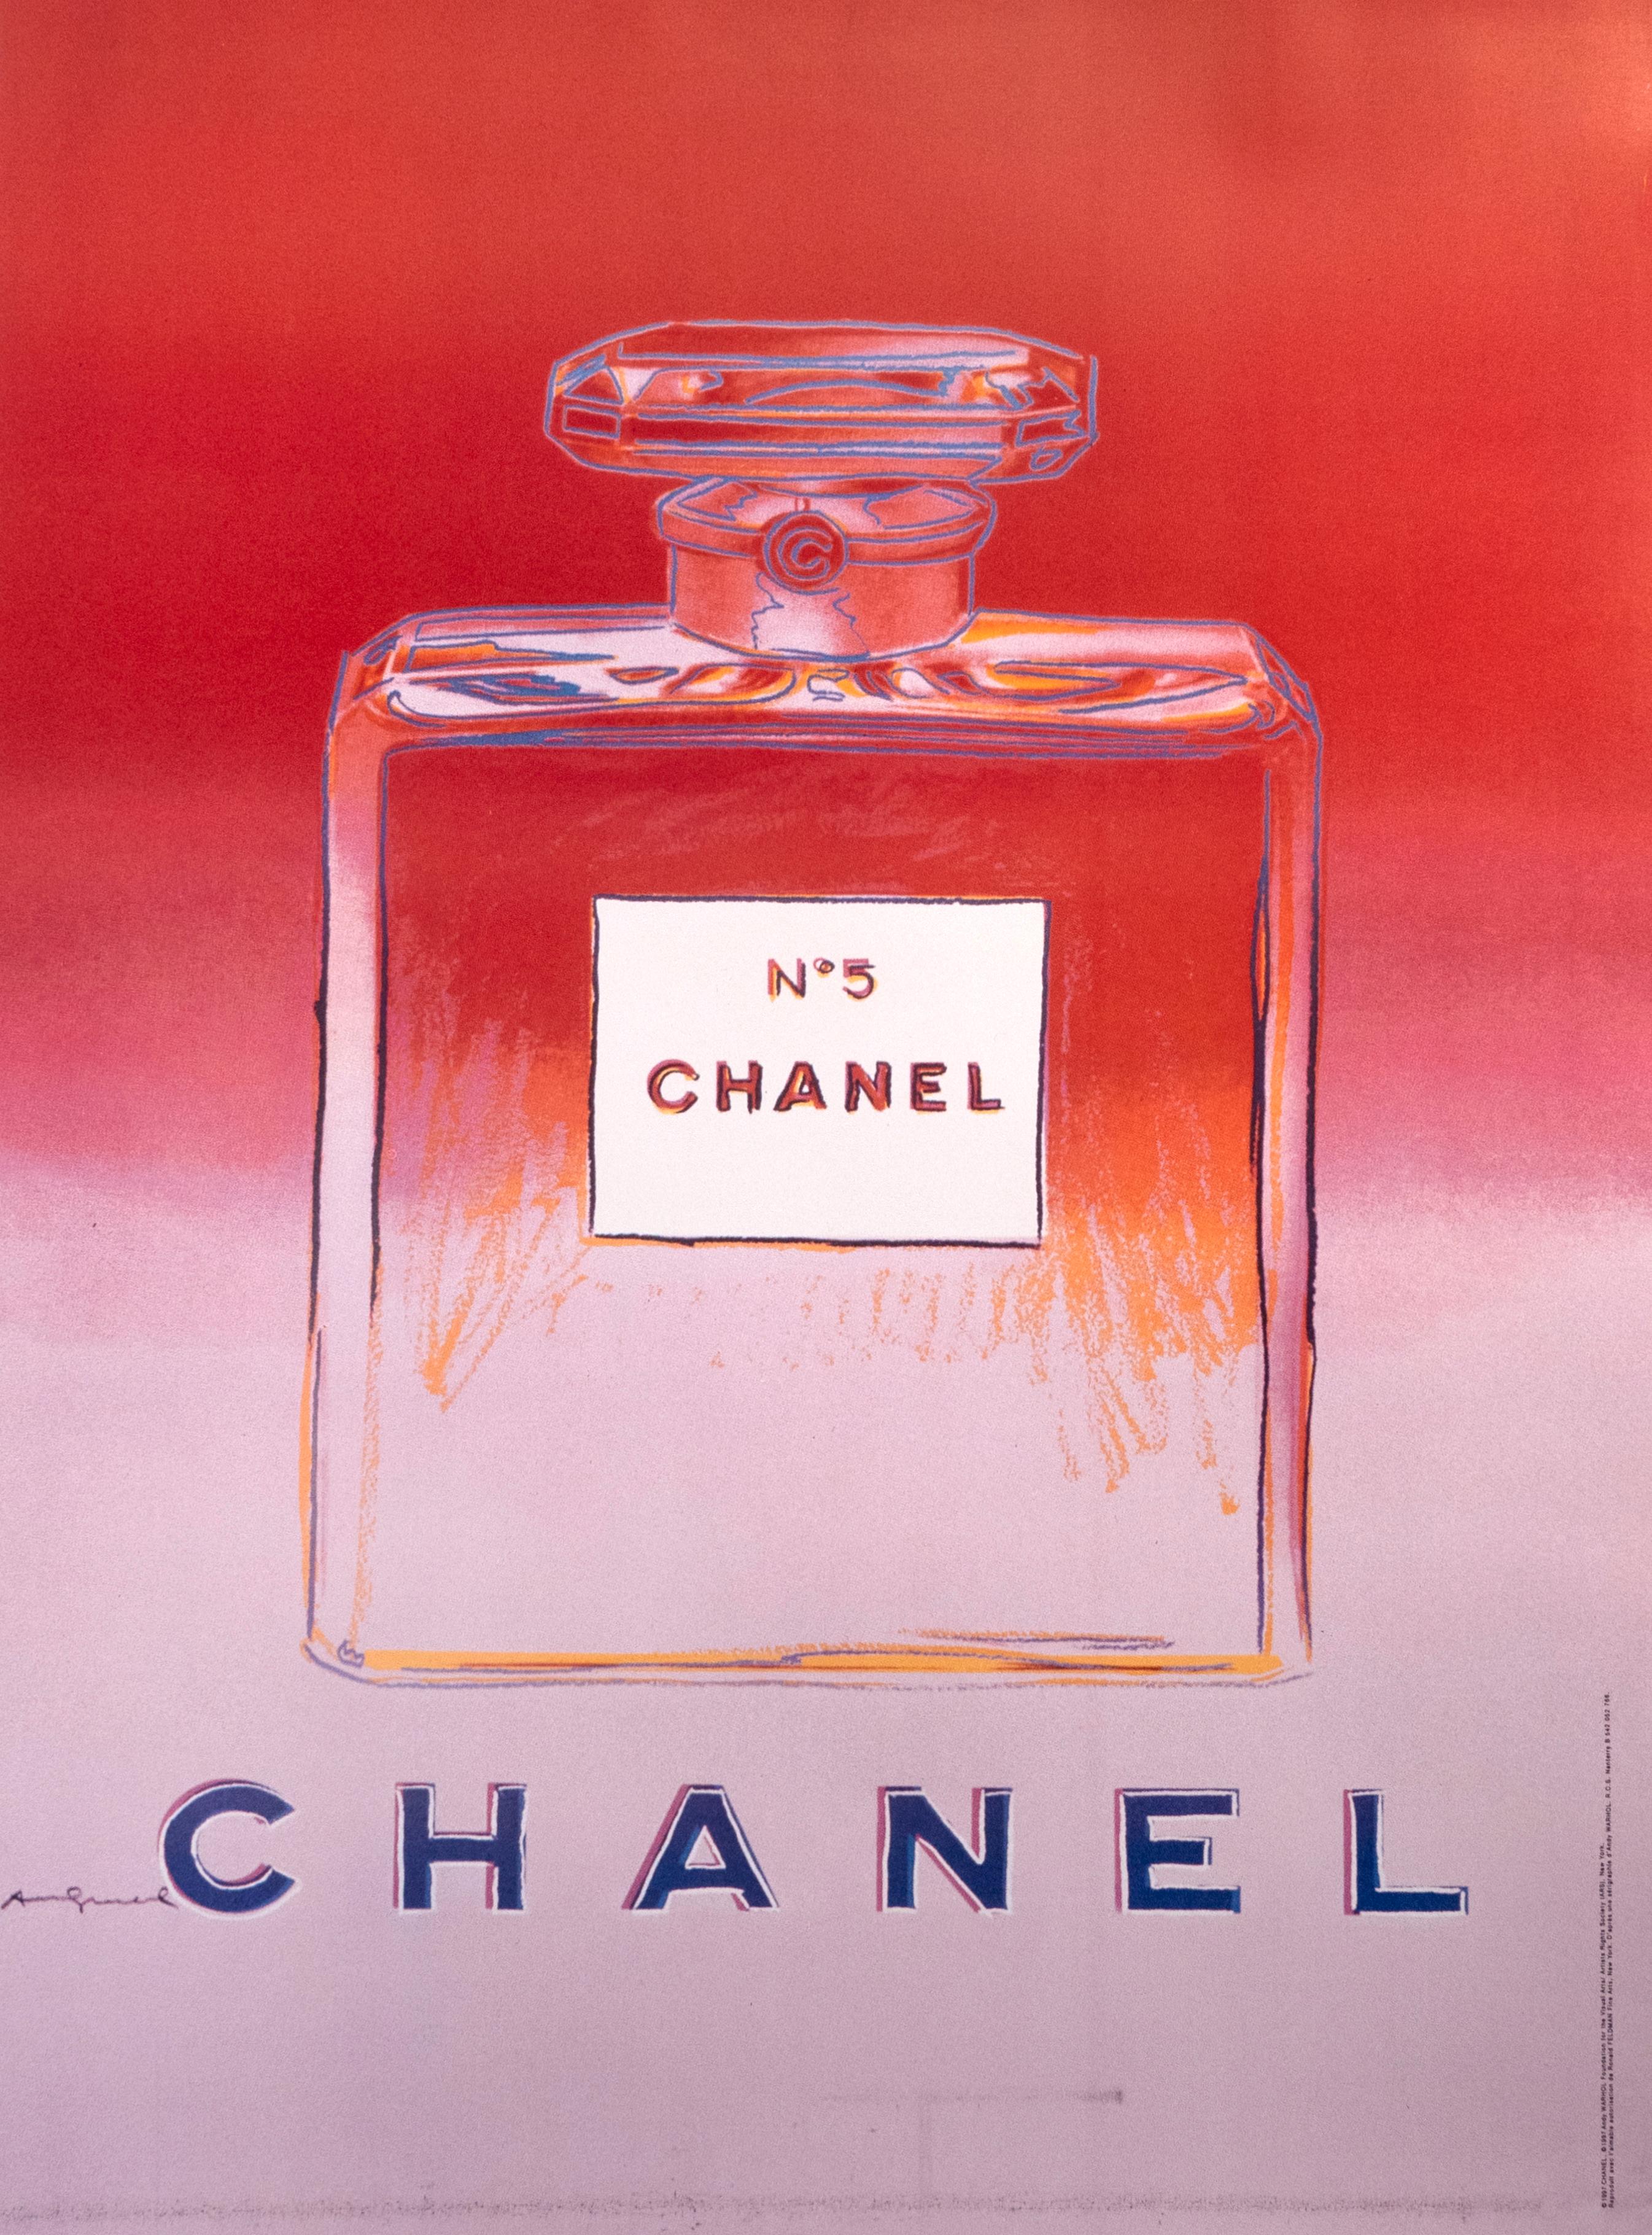 Chanel No. 5 (red/pink) Warhol Pop Art Perfume Original Vintage Poster